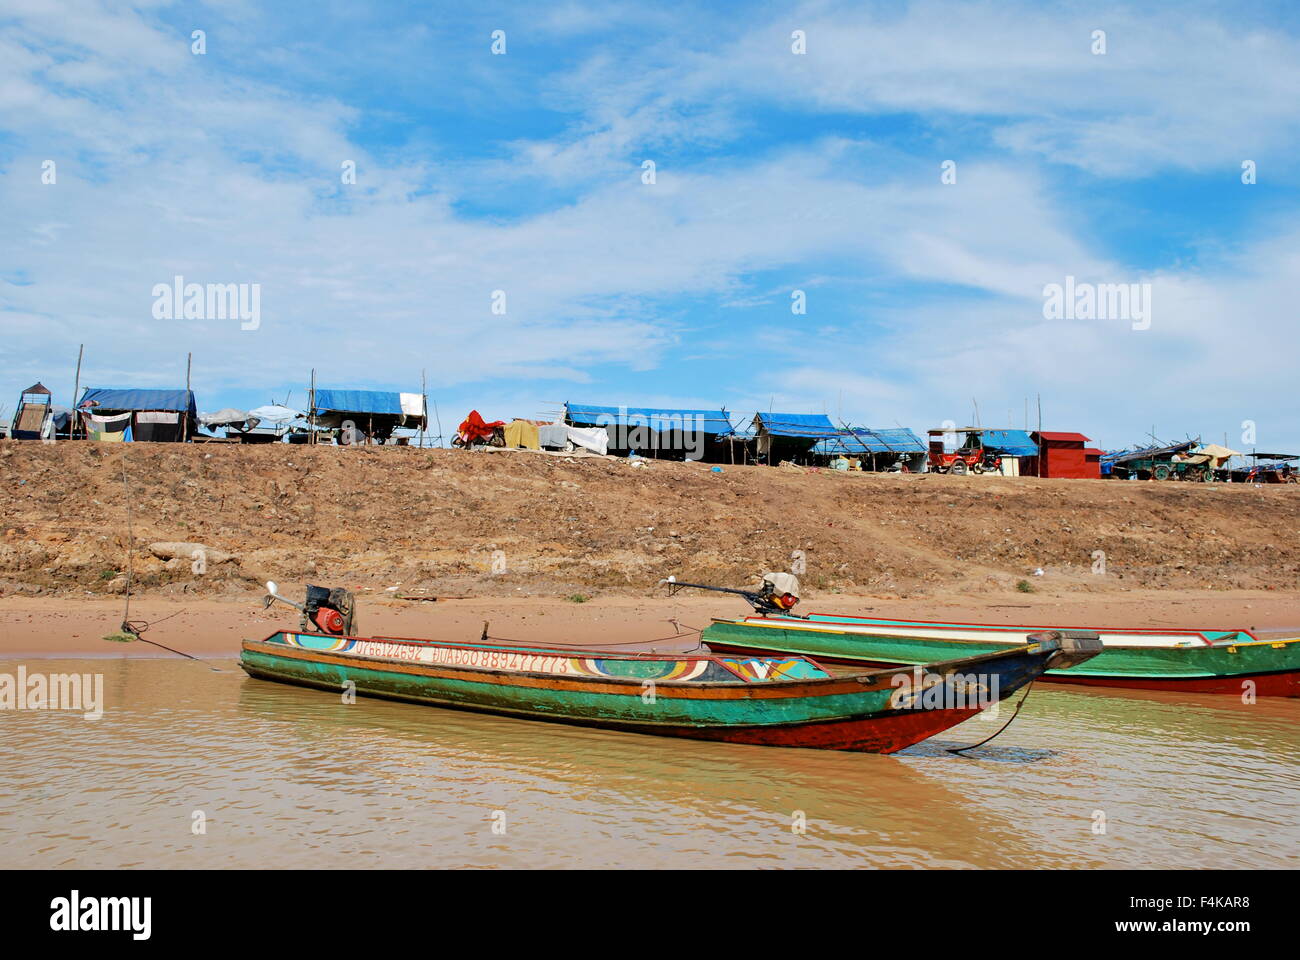 Small fishing boat on Tonle Sap River, Cambodia Stock Photo